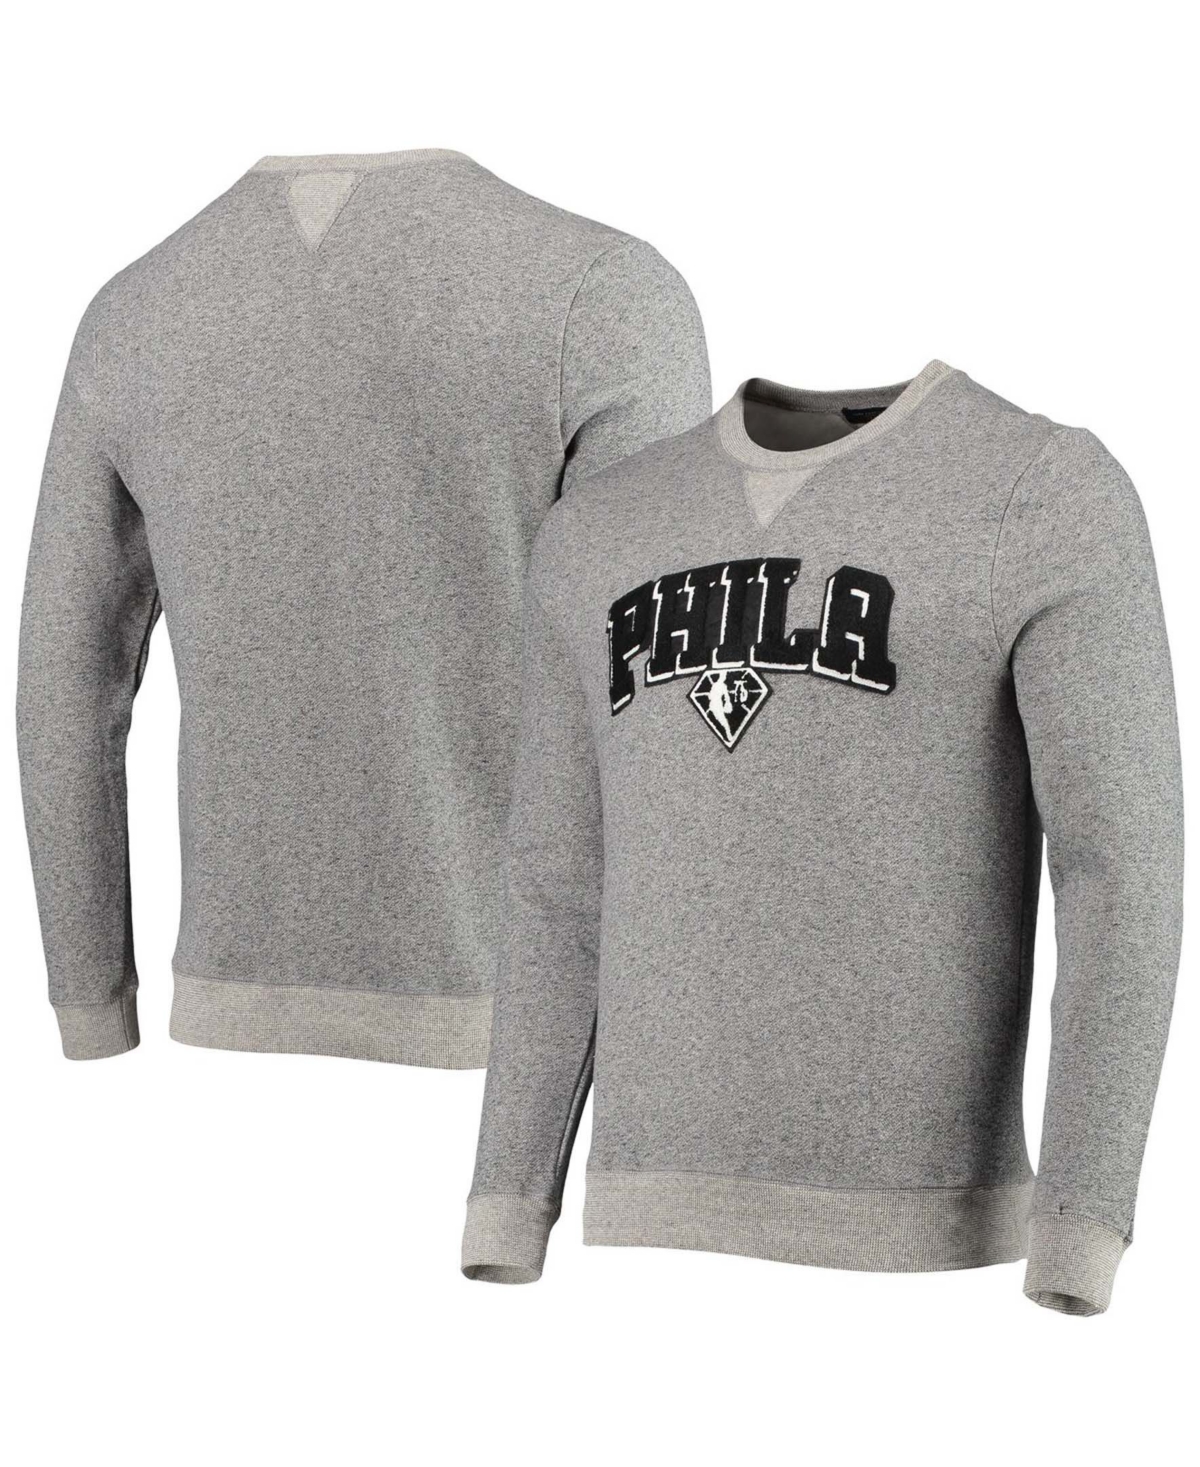 Men's Heathered Gray Philadelphia 76ers Marled French Terry Pullover Sweatshirt - Heathered Gray